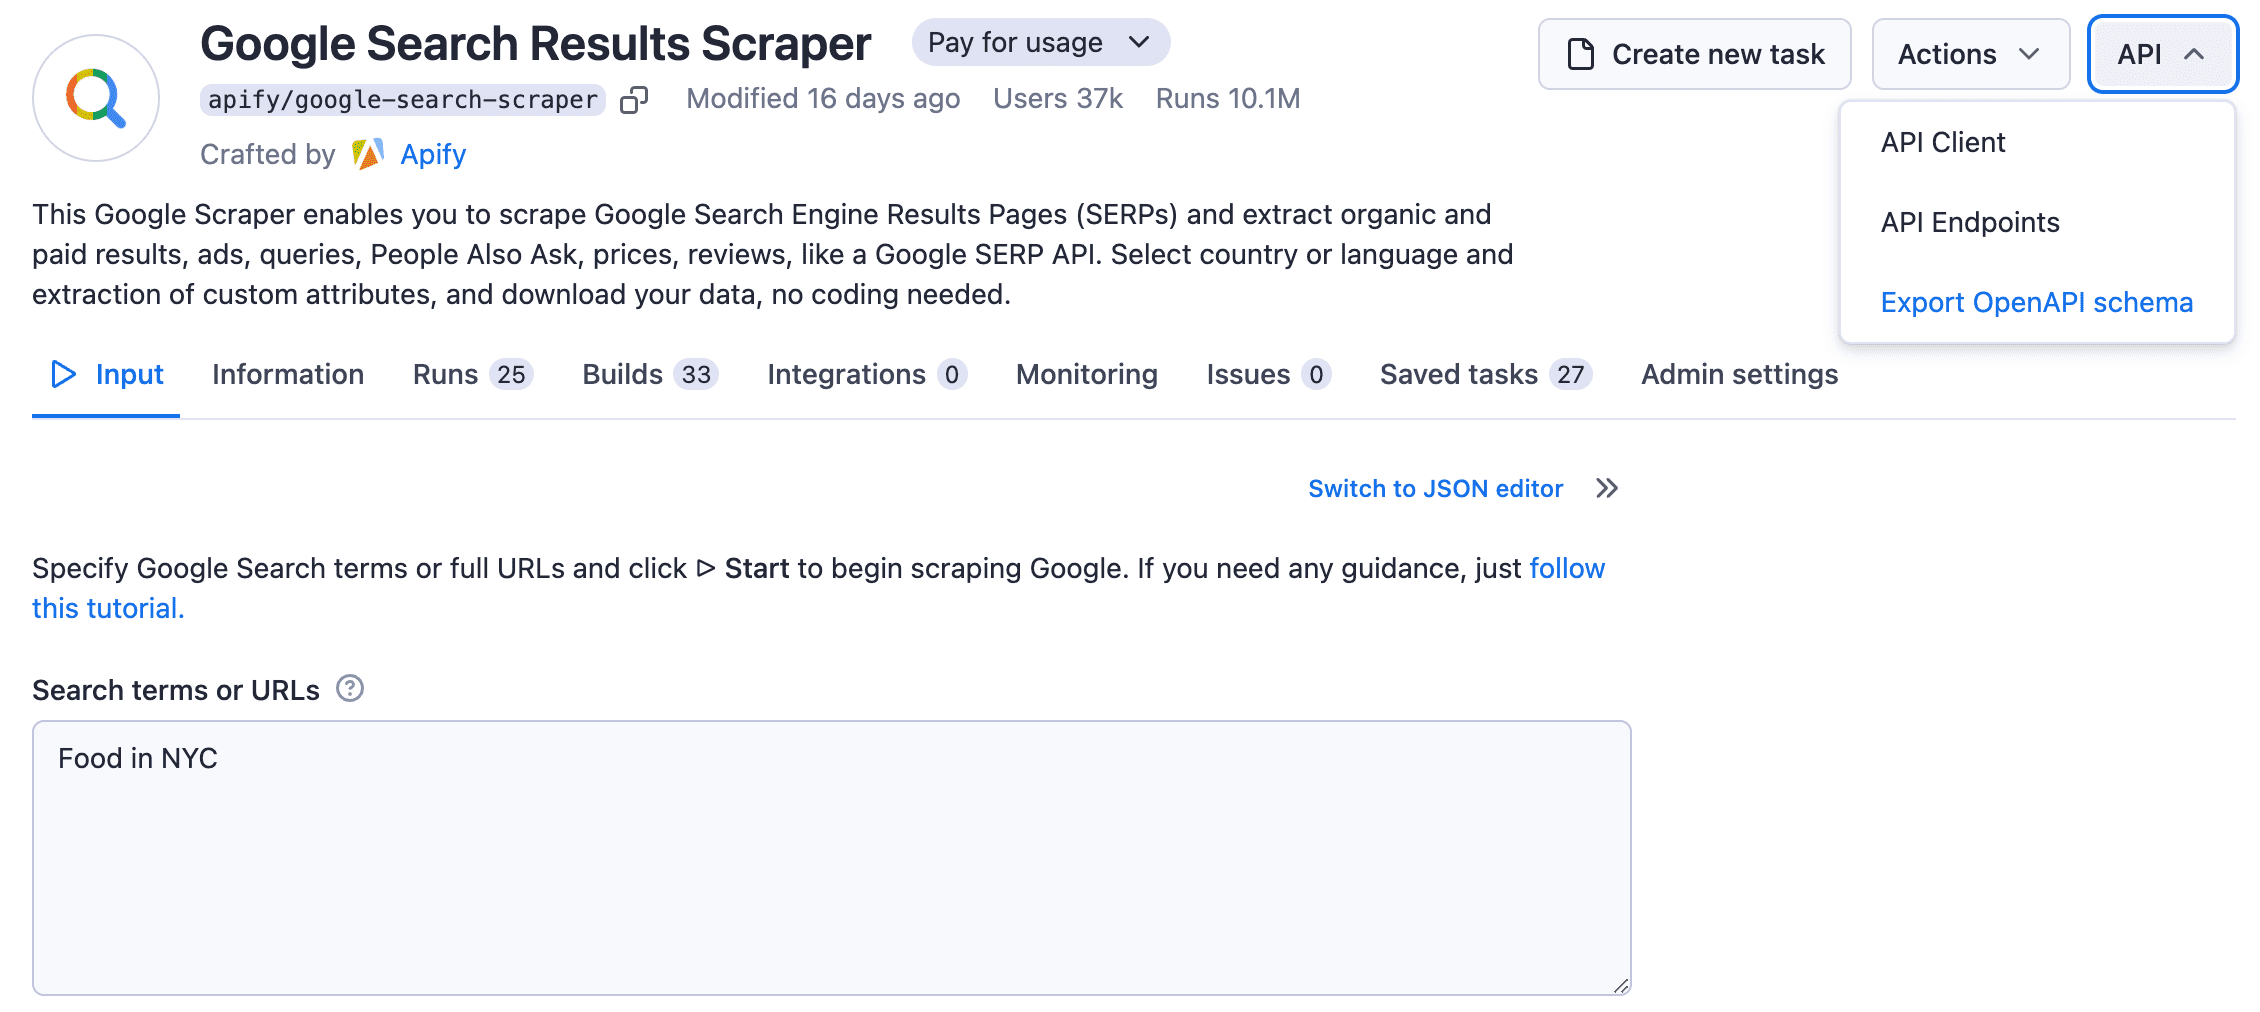 Google Search Scraper Actor details